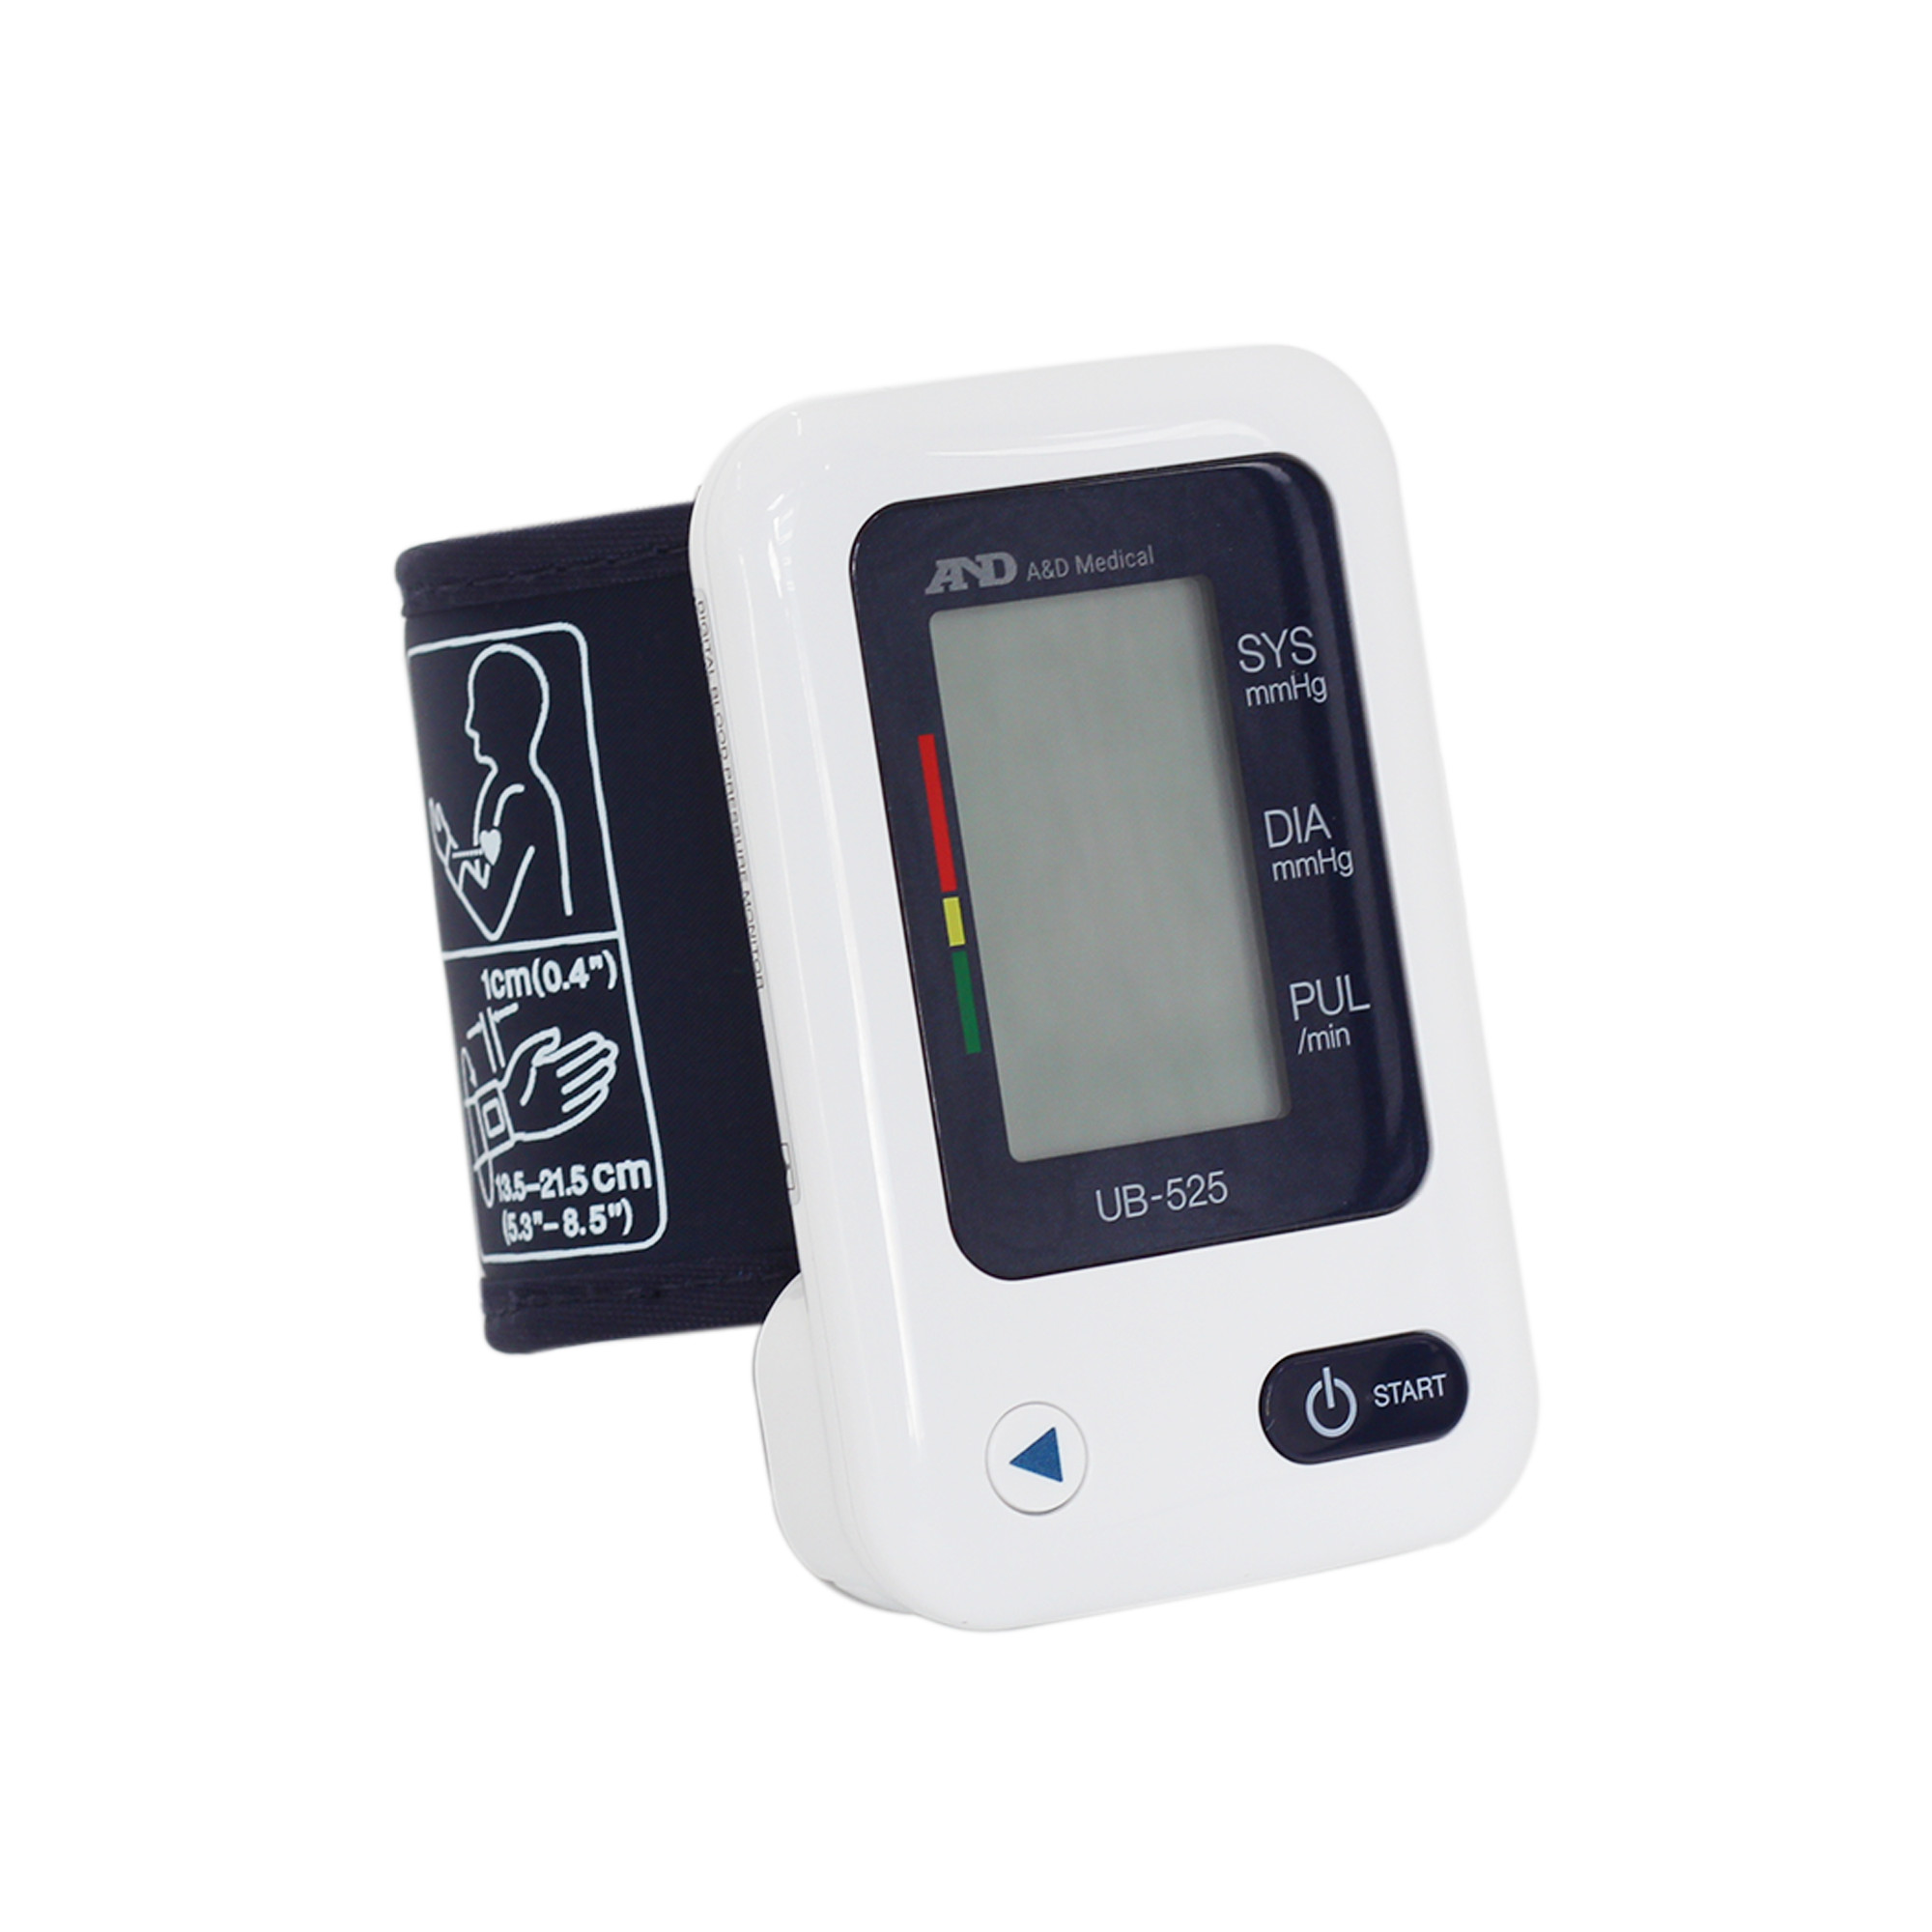 Wrist Blood pressure monitor AND UB-525